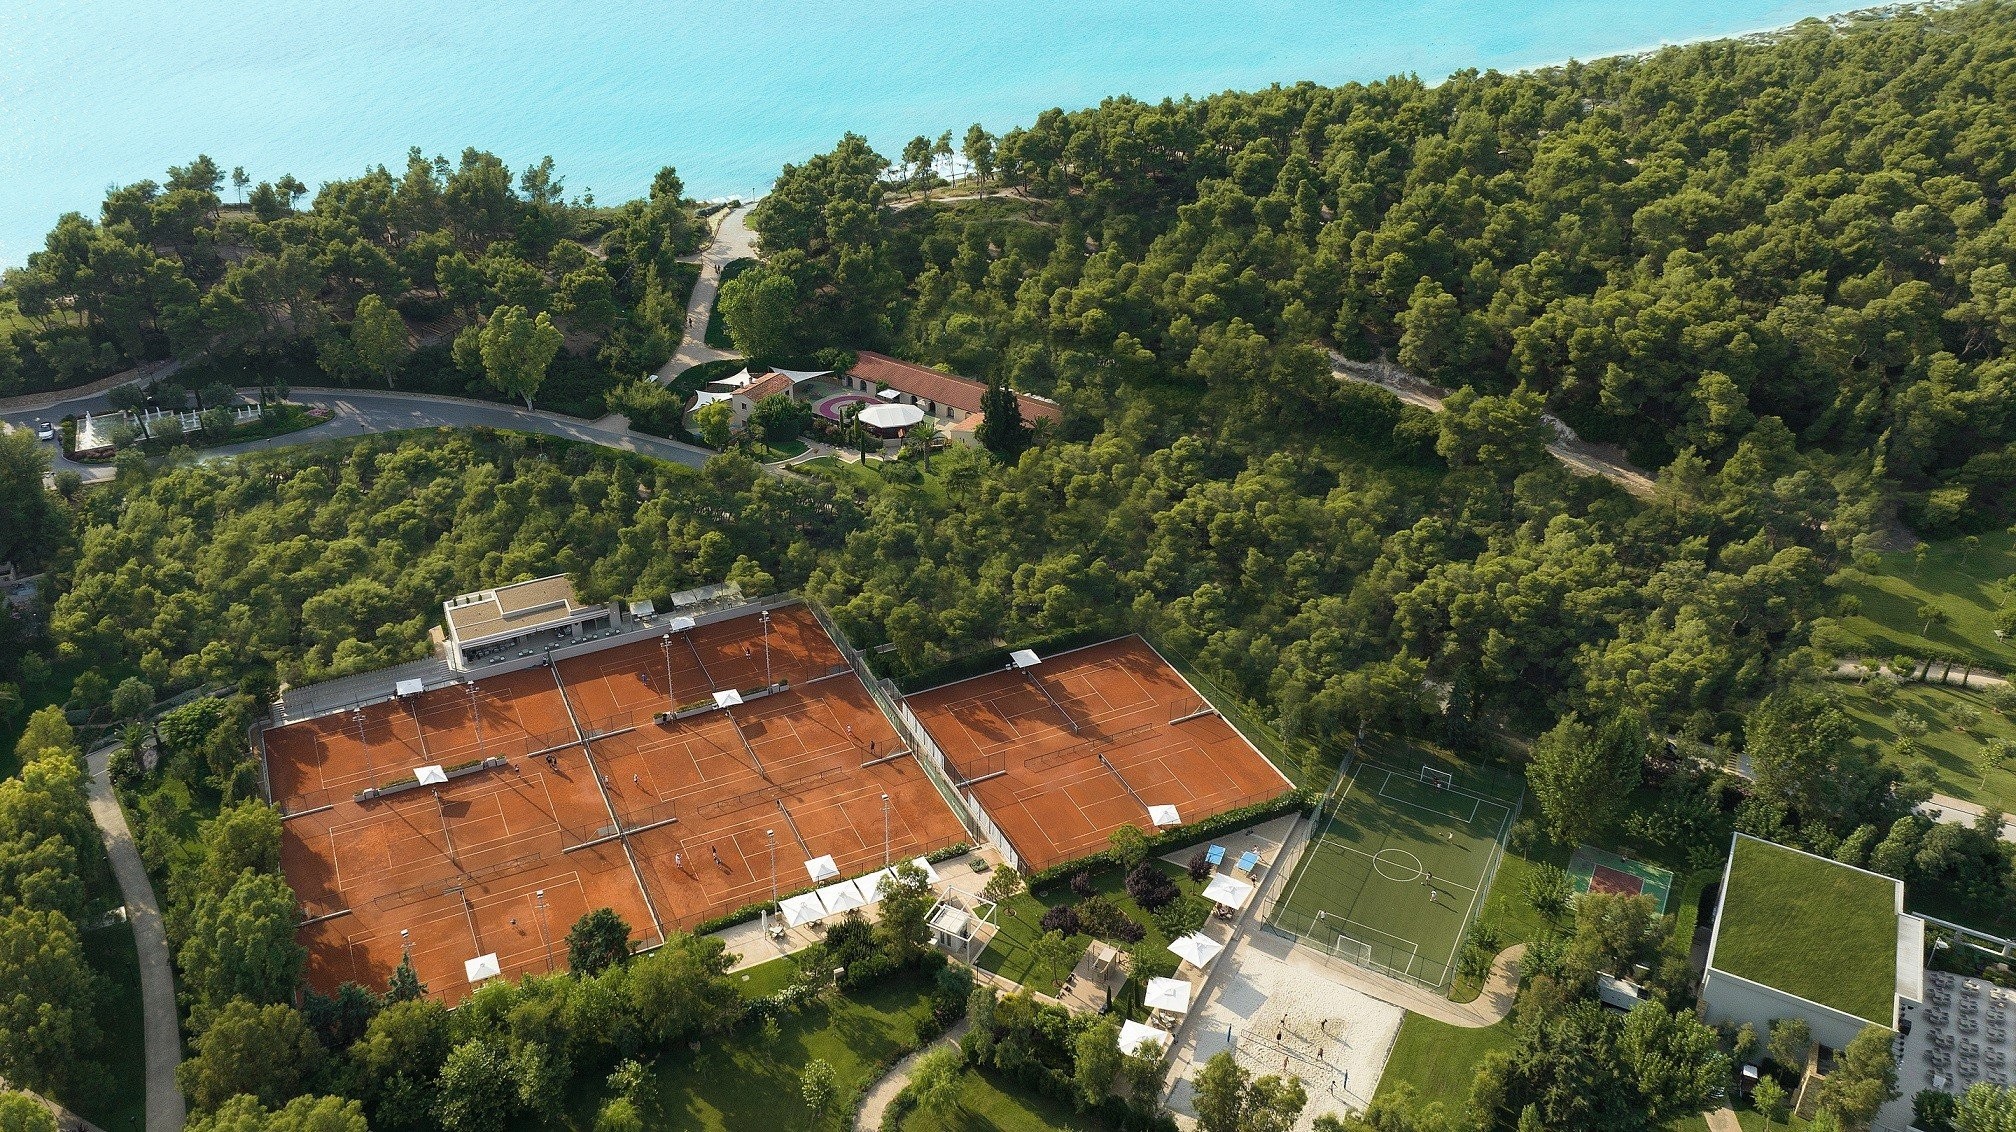 sani-resort-rafa-nadal-tennis-center.jpg